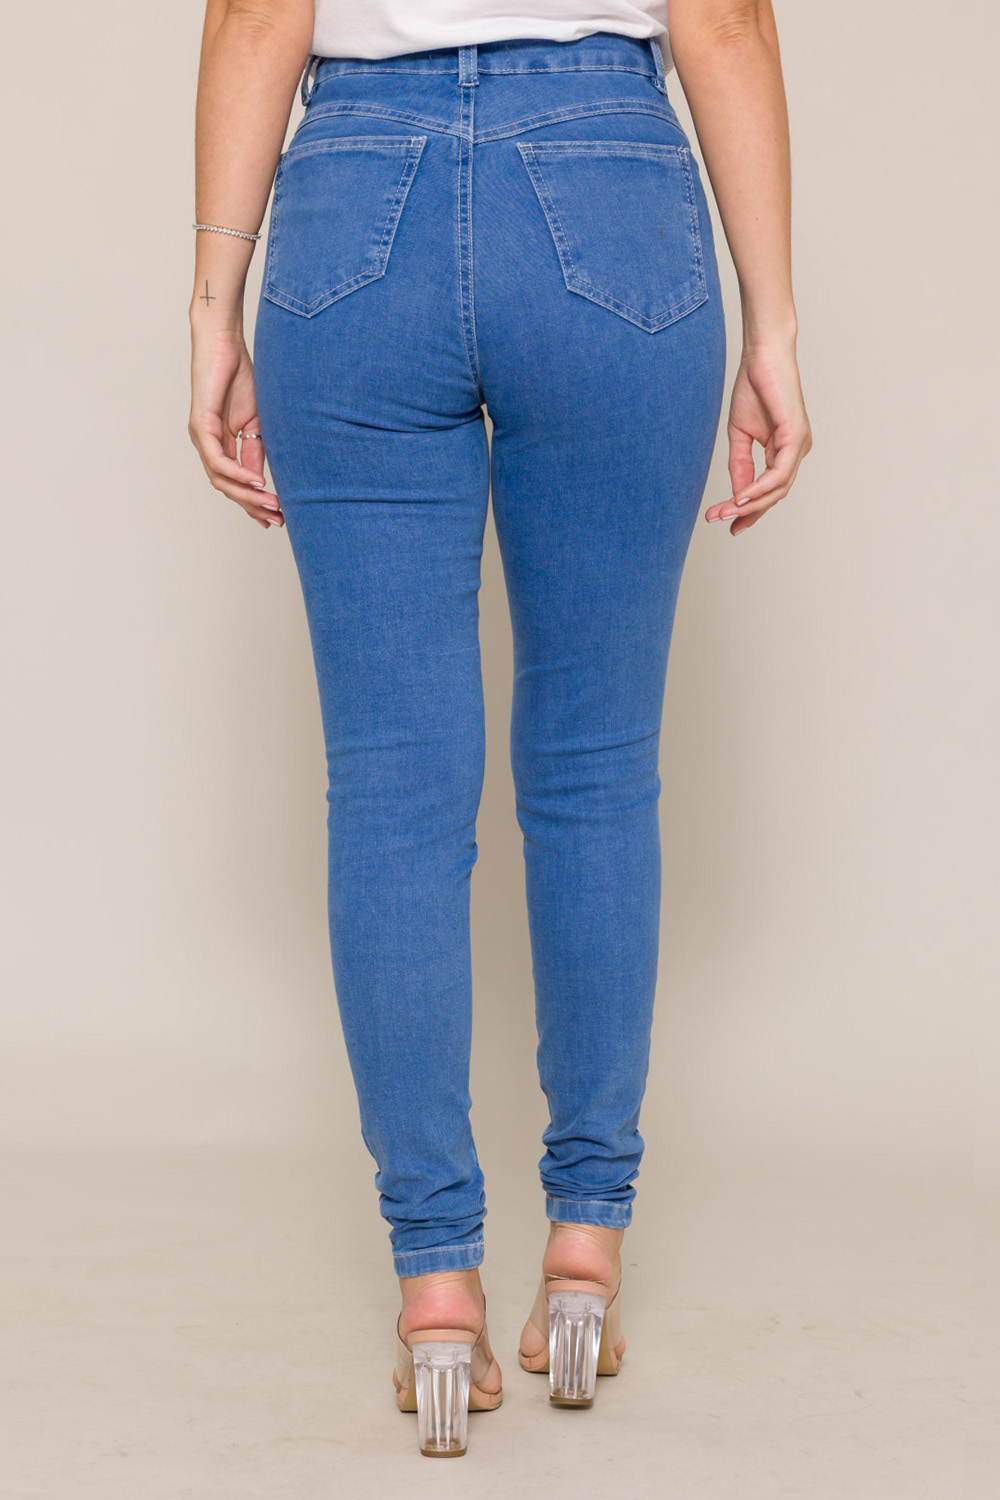 Calça Jeans Skinny Basic 11719 - Jeans Médio 2